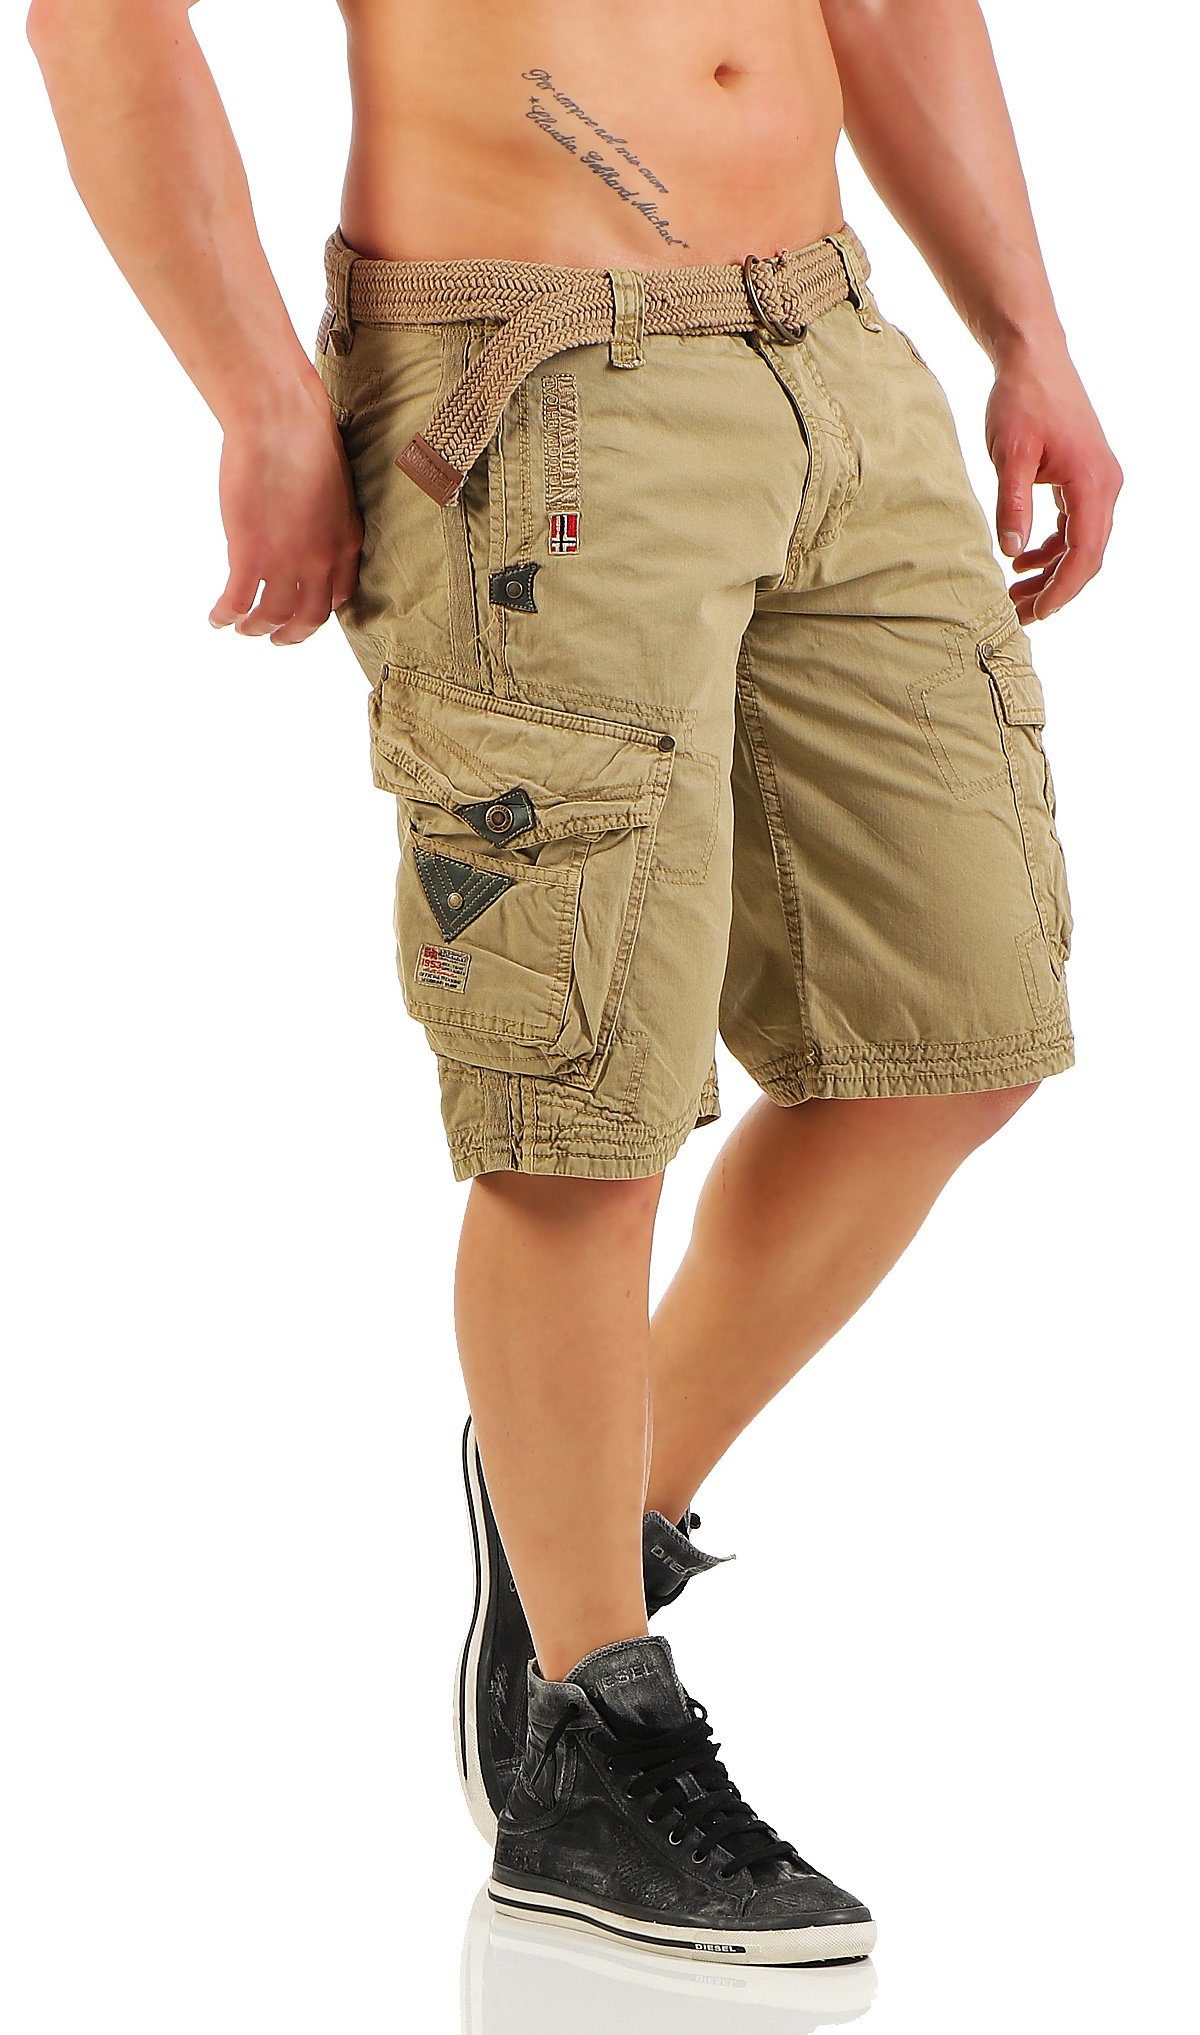 Gürtel) Herren abnehmbarem Geographical Shorts, Beige / Norway Cargoshorts kurze (mit Hose, unifarben camouflage G-PERLE Shorts